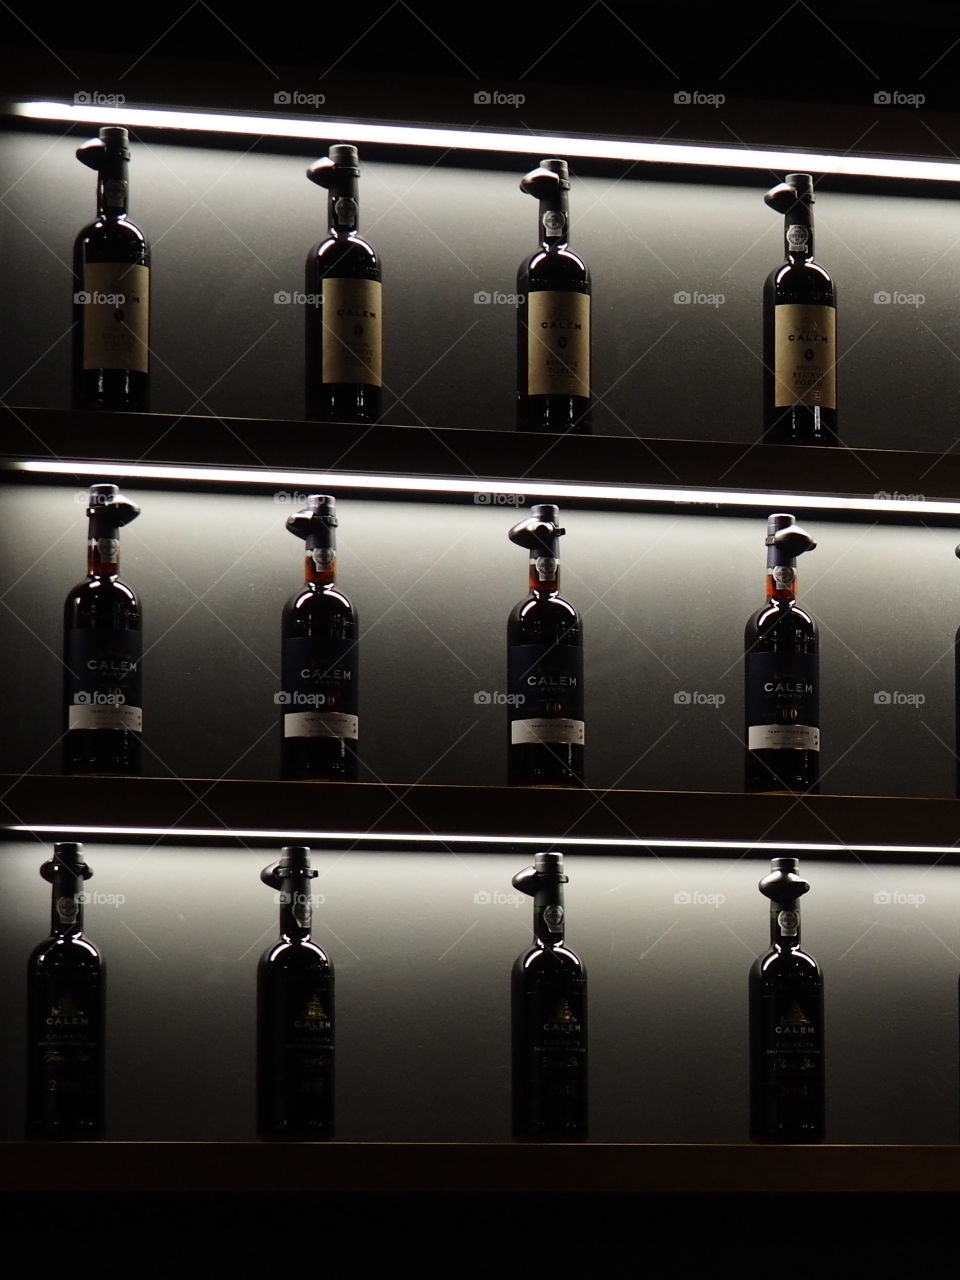 Bottles of Port wine in a showroom in Porto, Portugal in front of dark lightning.